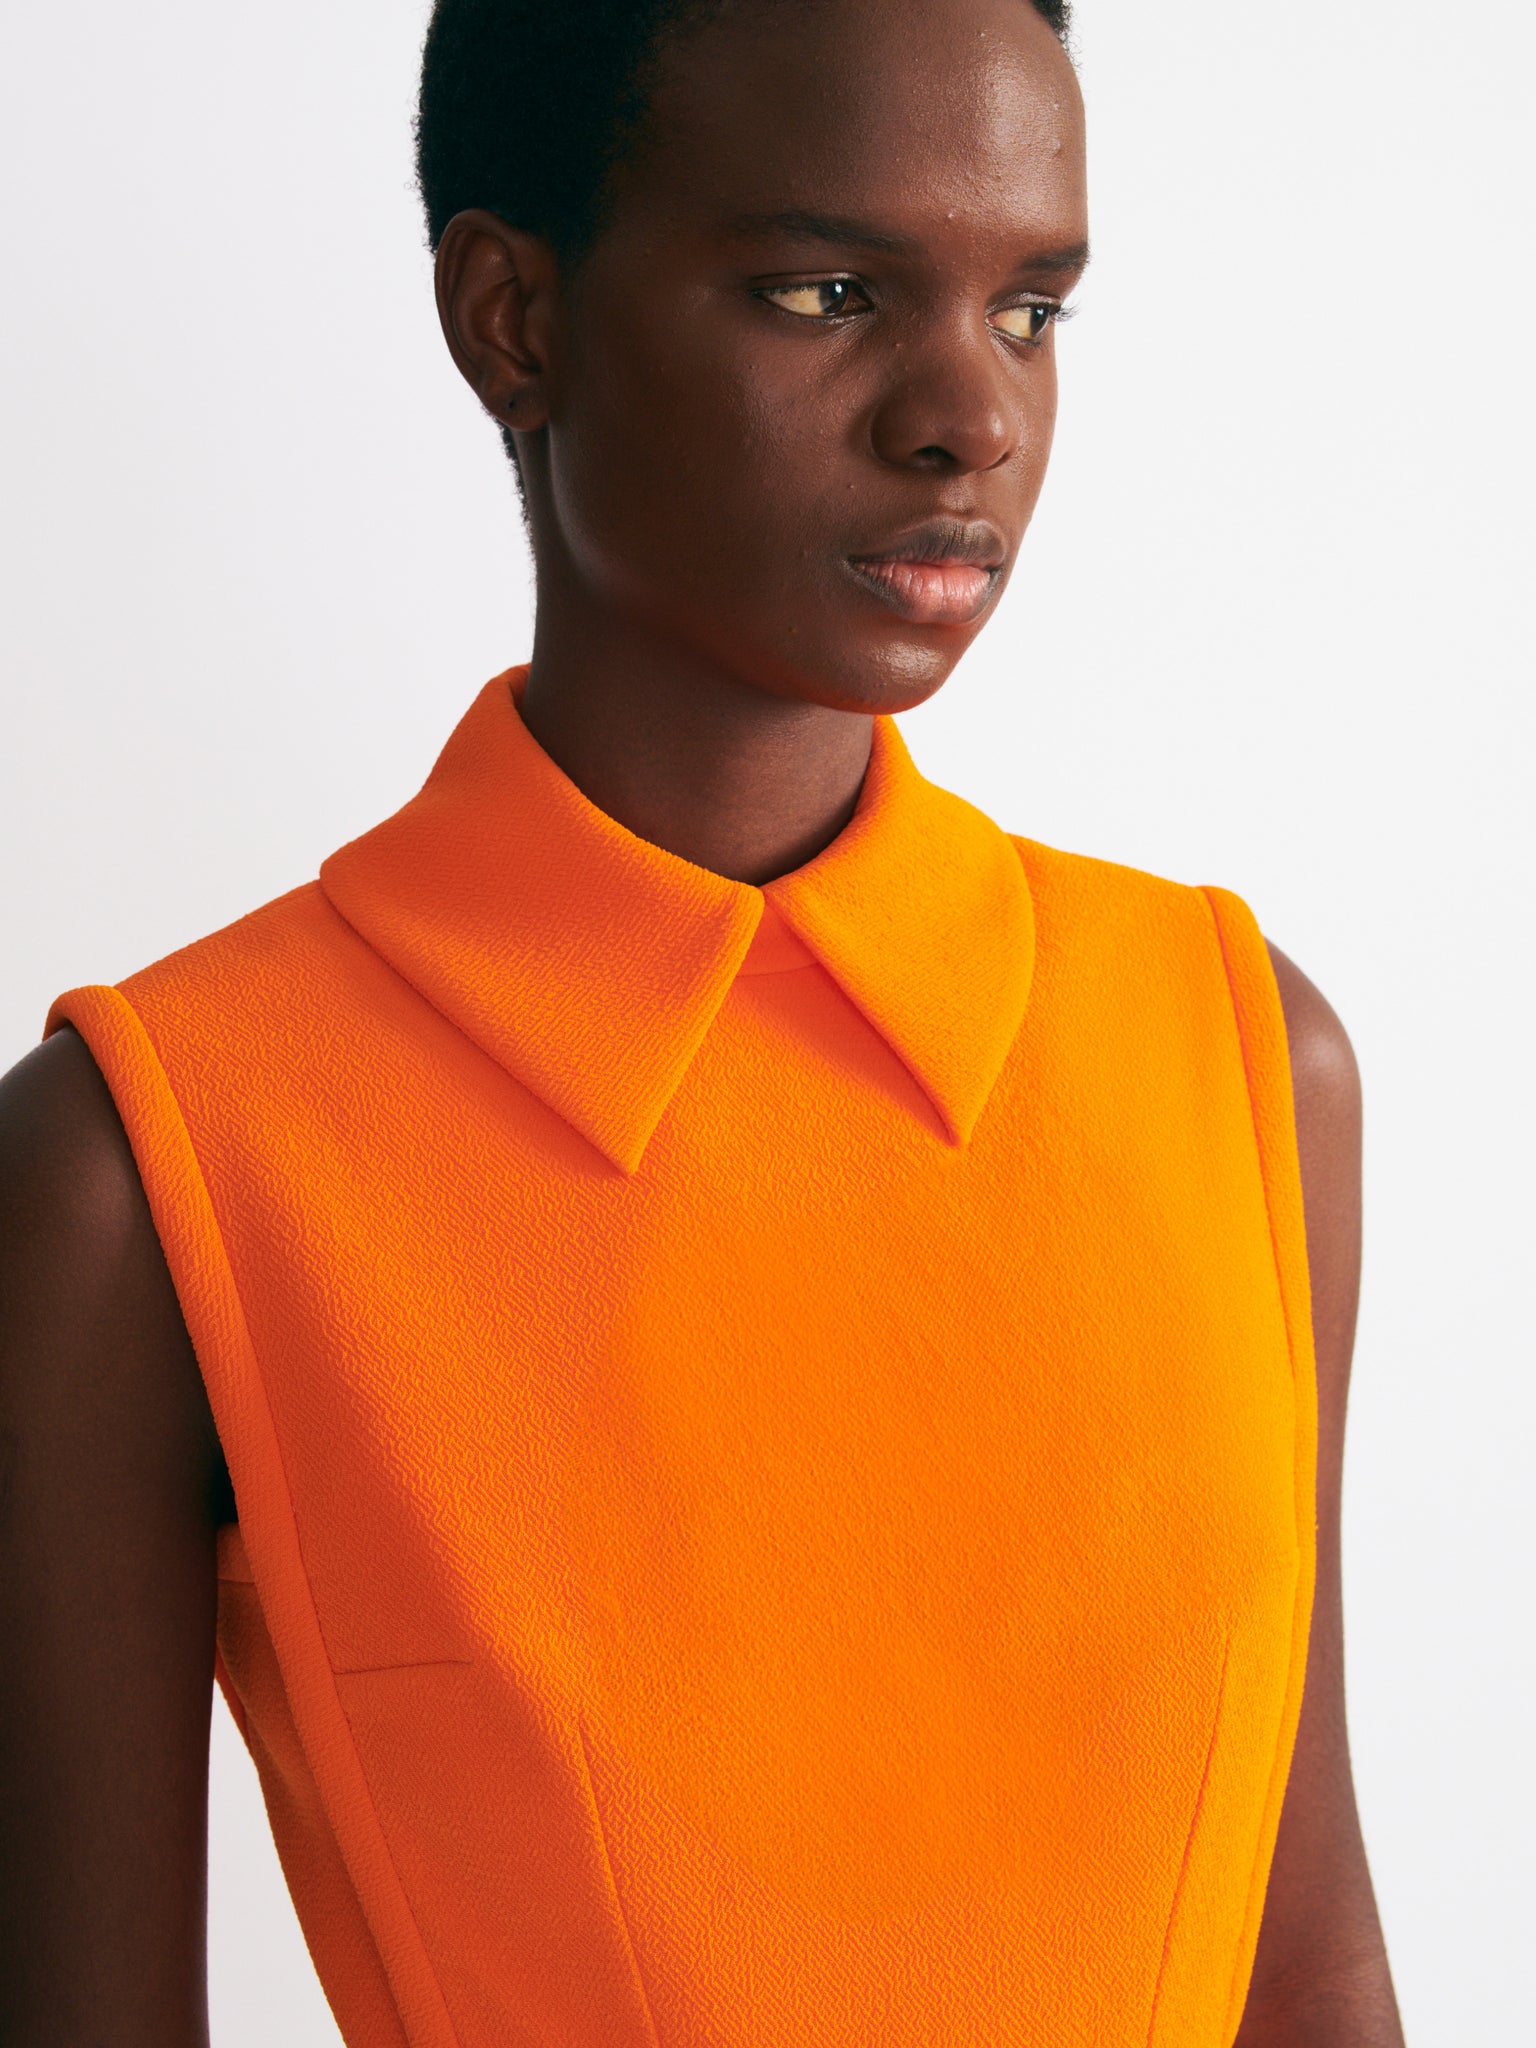 Miles Dress In Hot Orange Double Crepe | Emilia Wickstead